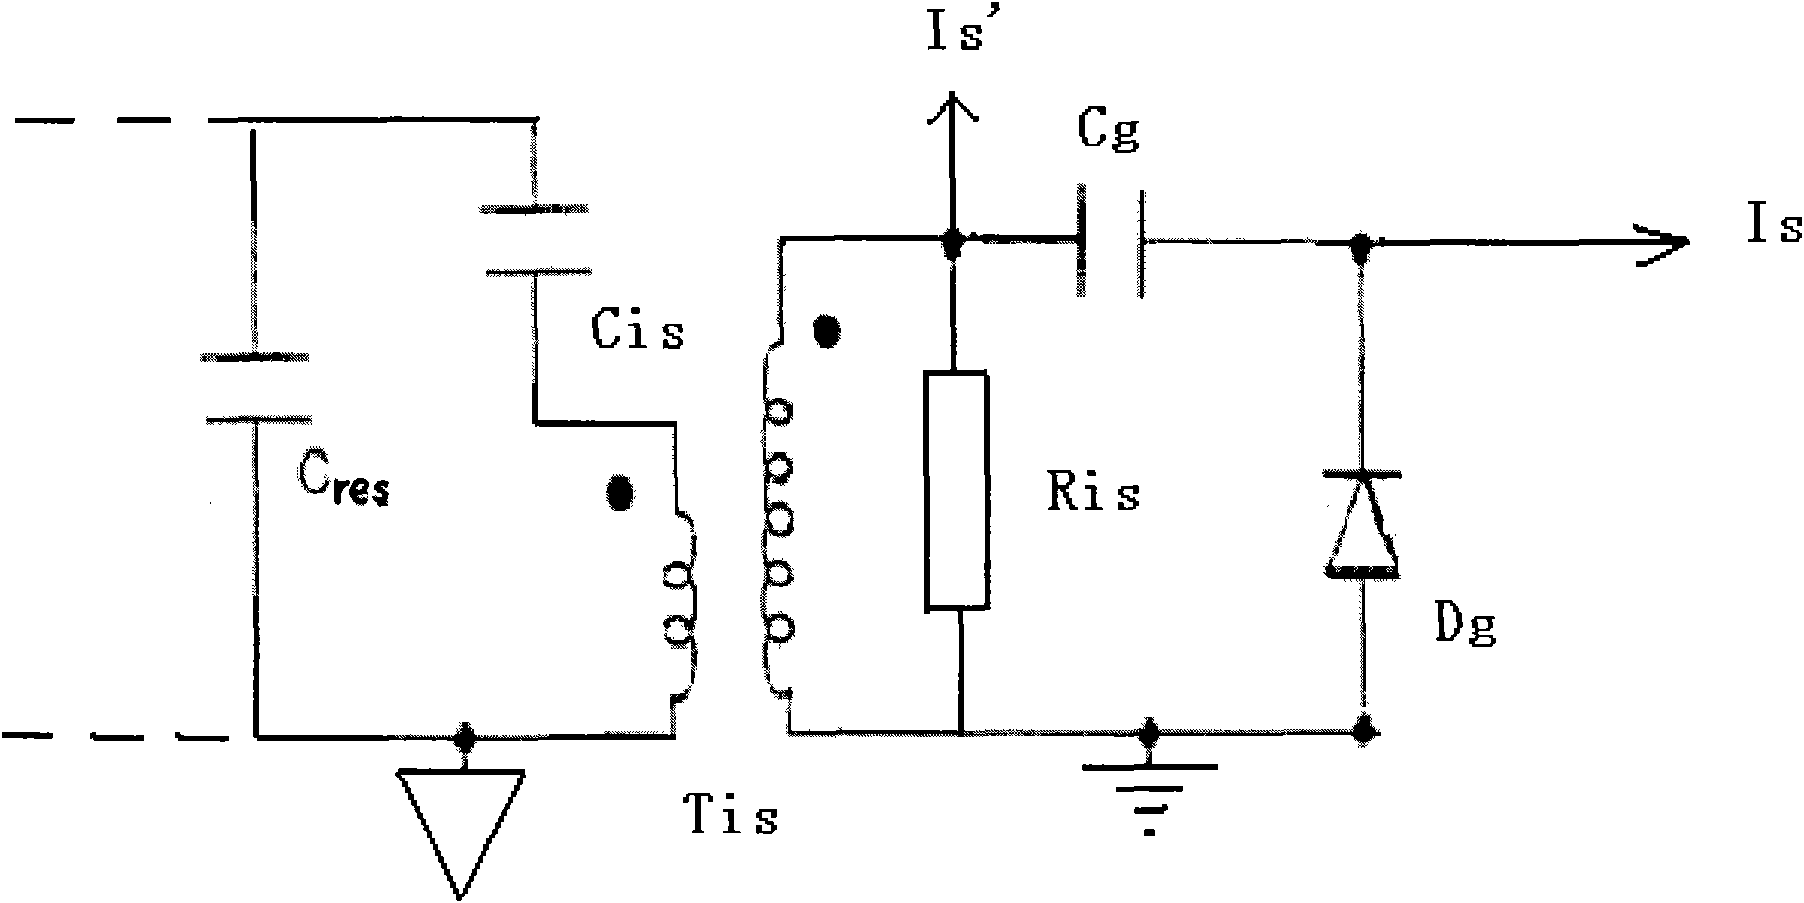 Current sampling circuit